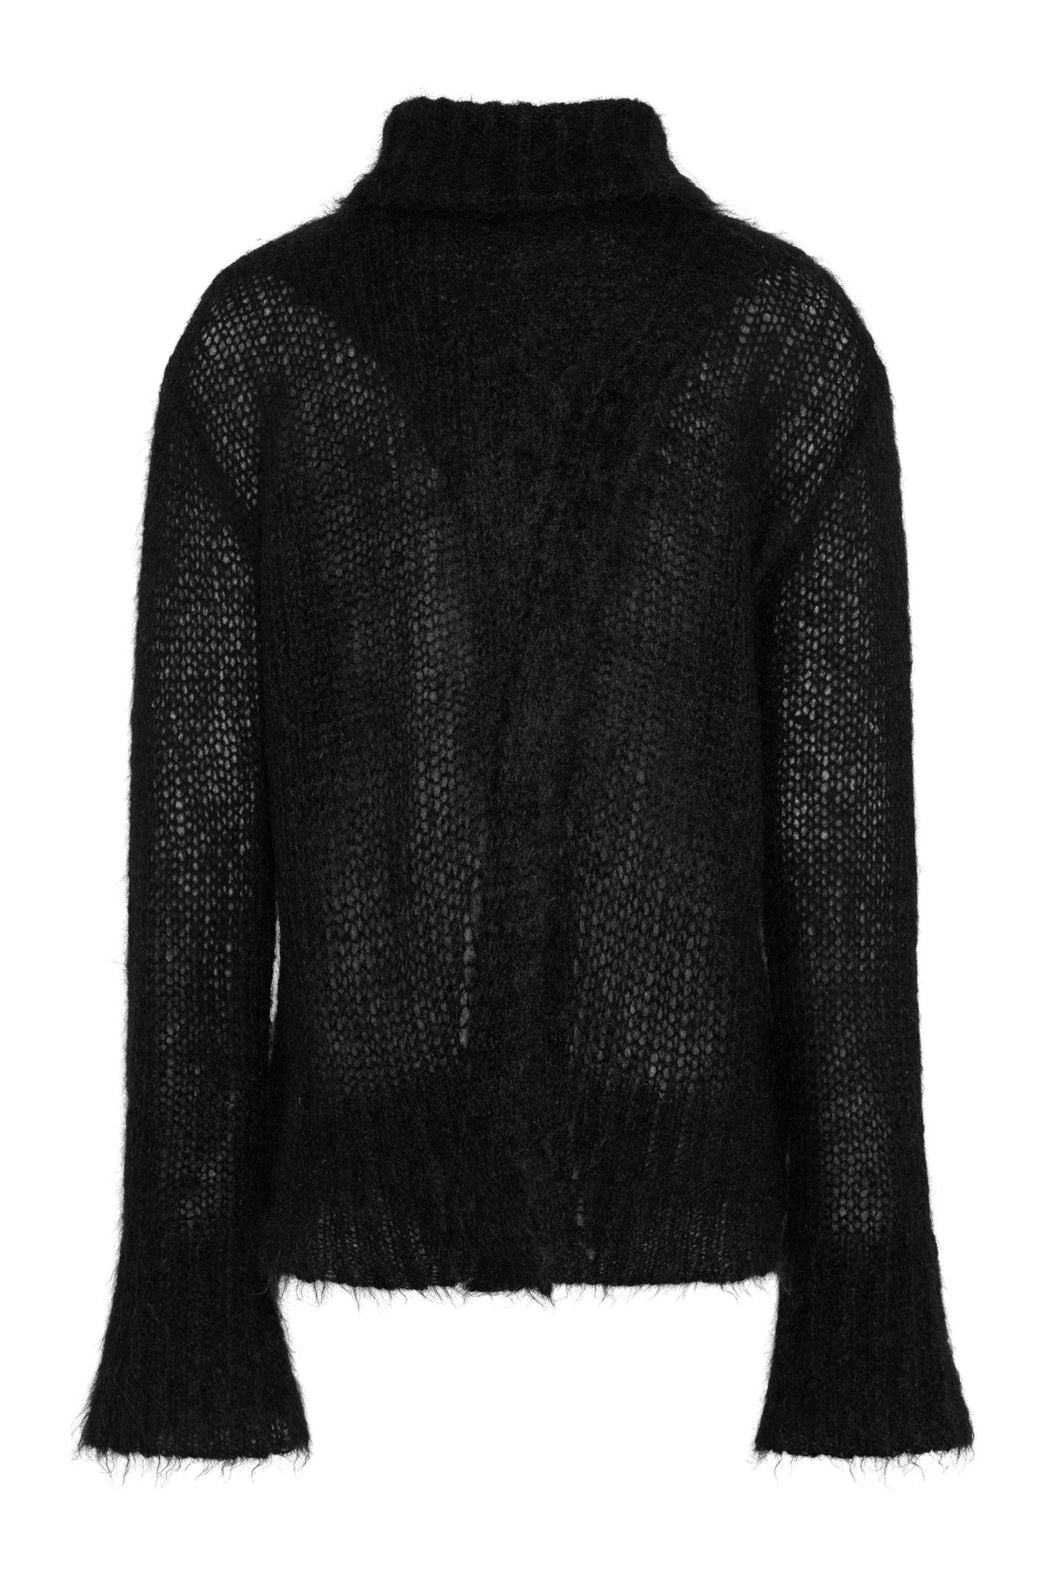 Envelope1976 Filtvet knit - Mohair & Wool Sweater Black